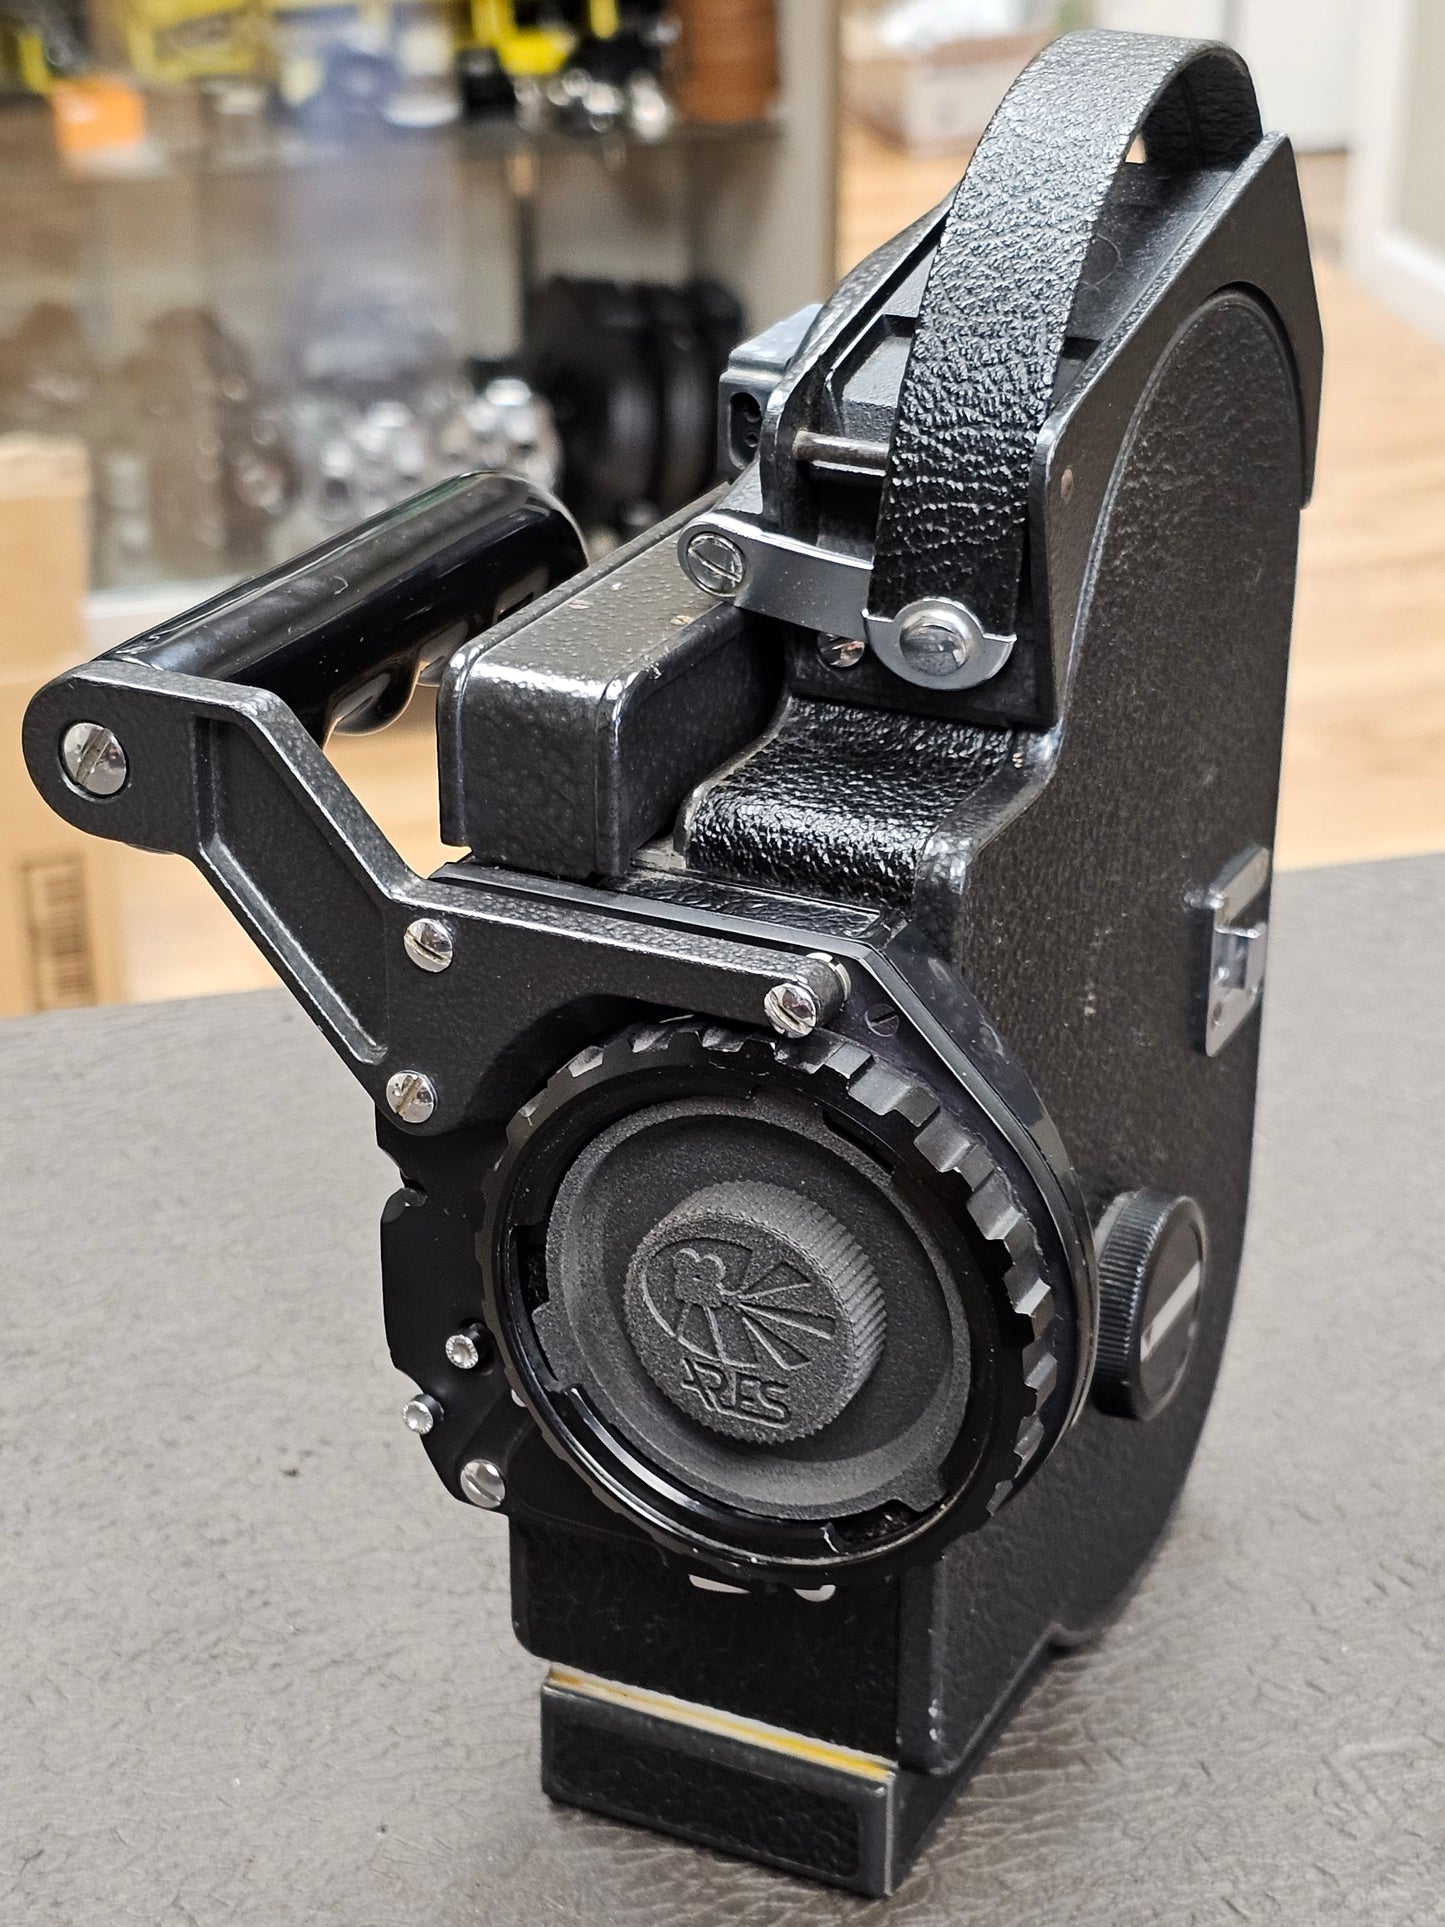 Bolex EBM 16mm Camera with 13x viewfinder S# 307957 (New)